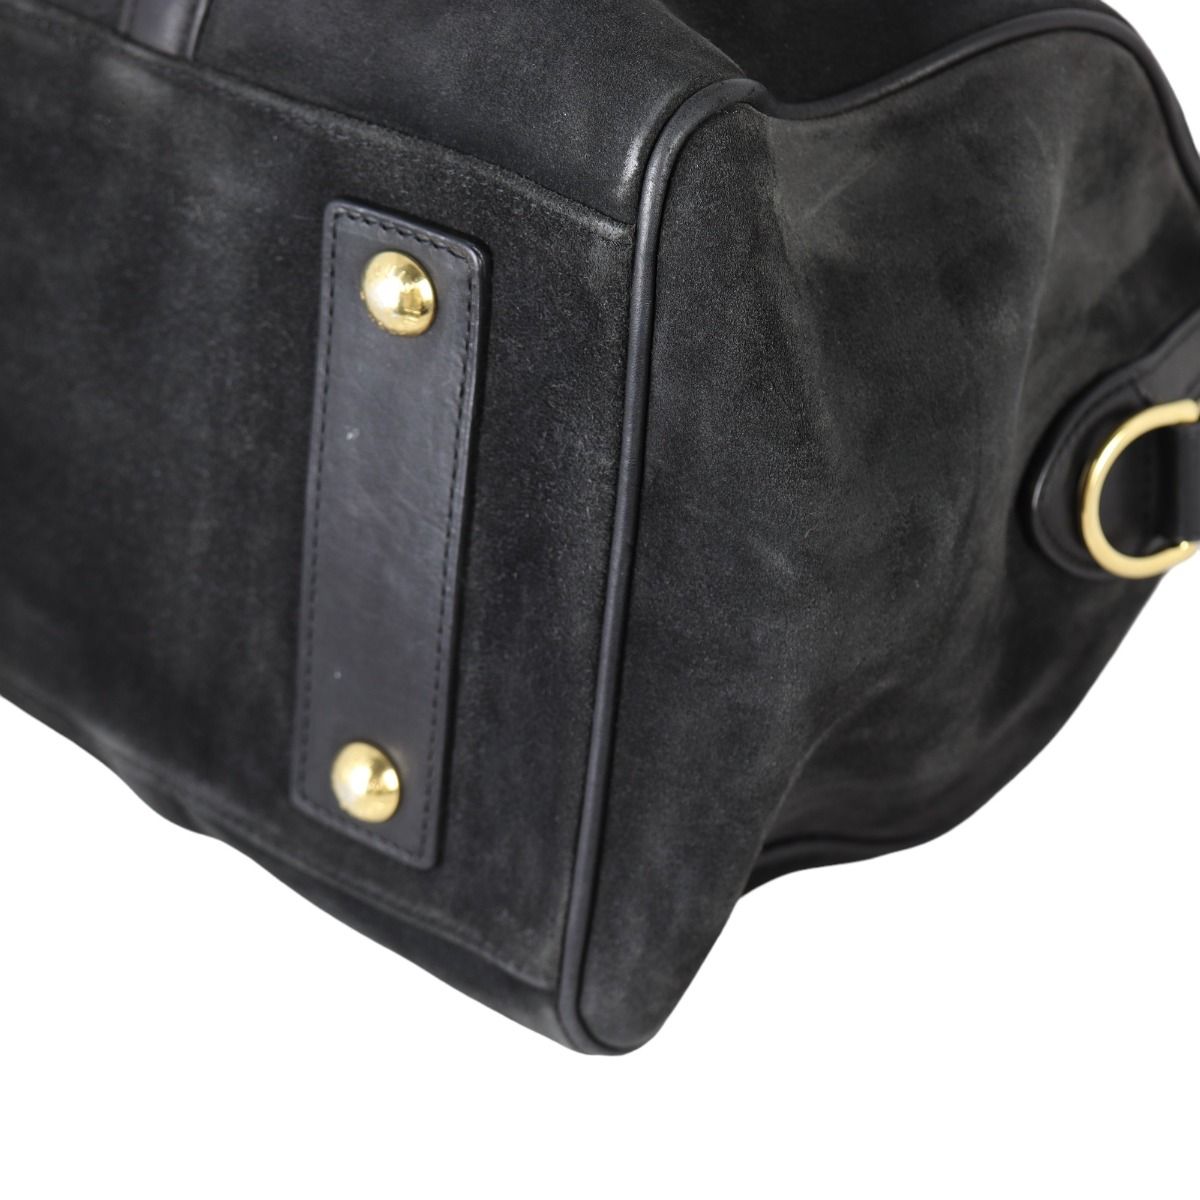 Black Louis Vuitton Sofia Coppola SC Bag with Black Leather trim